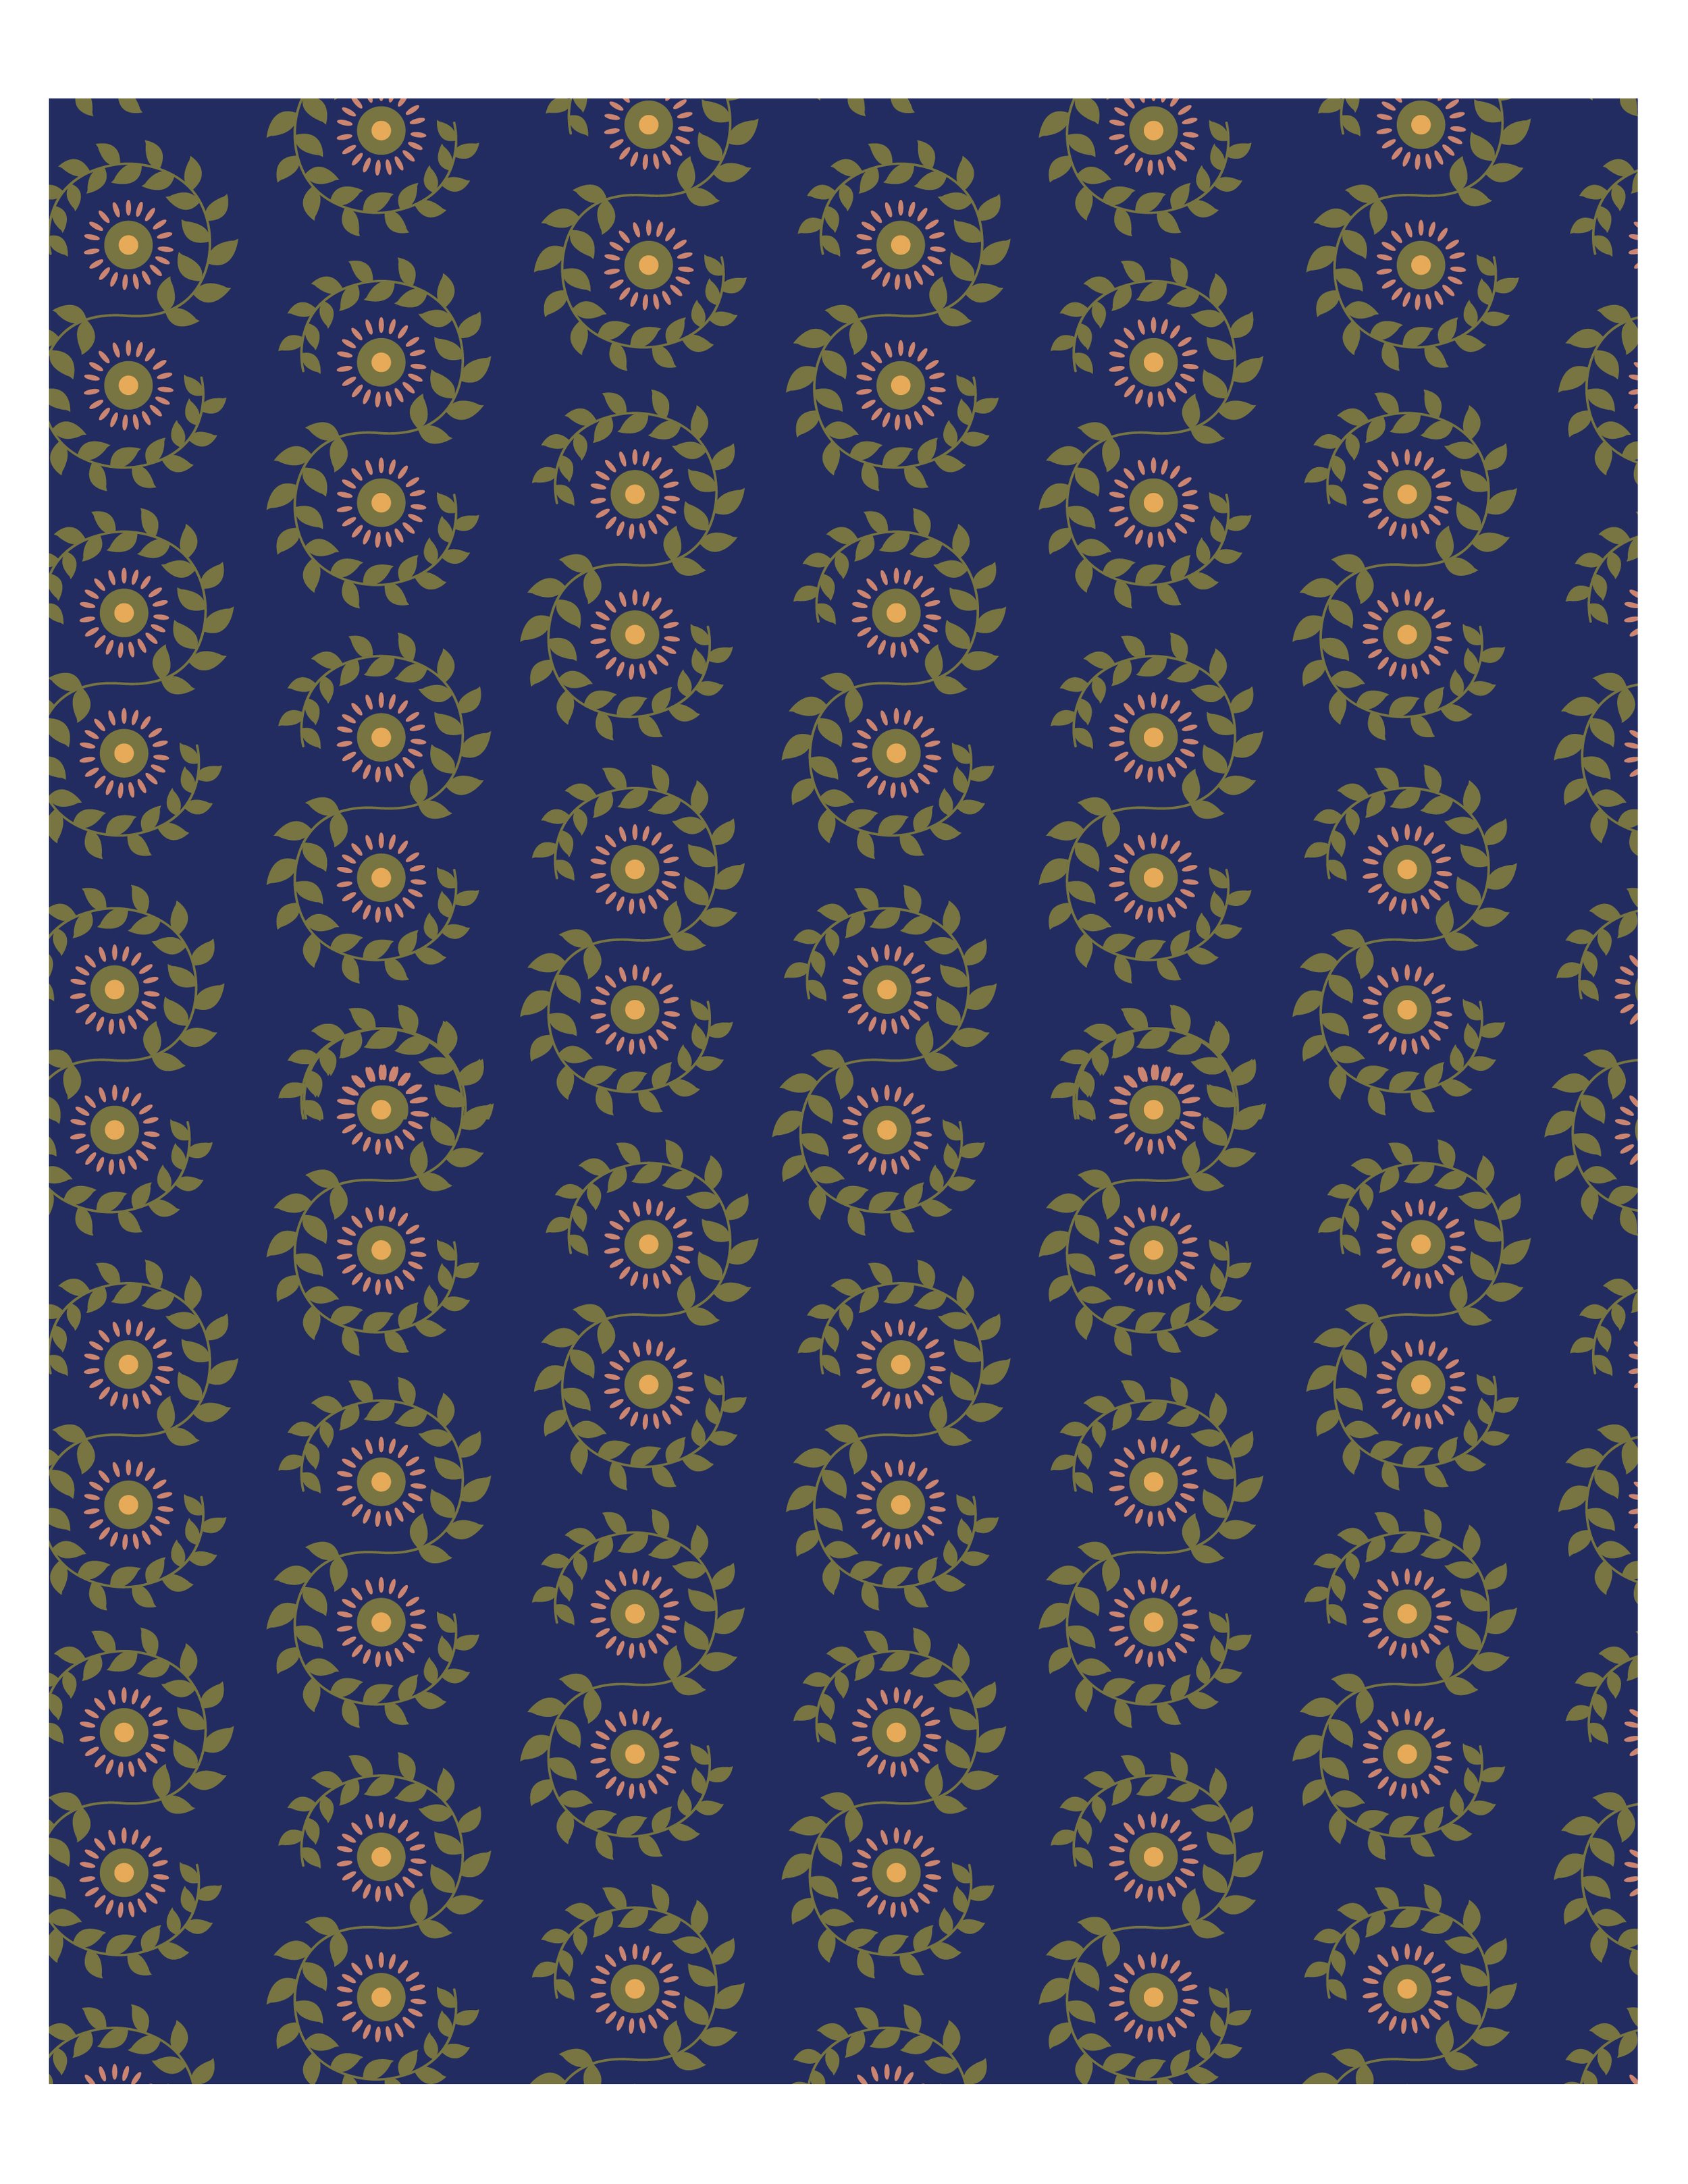 Floral Vine on Blue Pattern Print-01.jpg